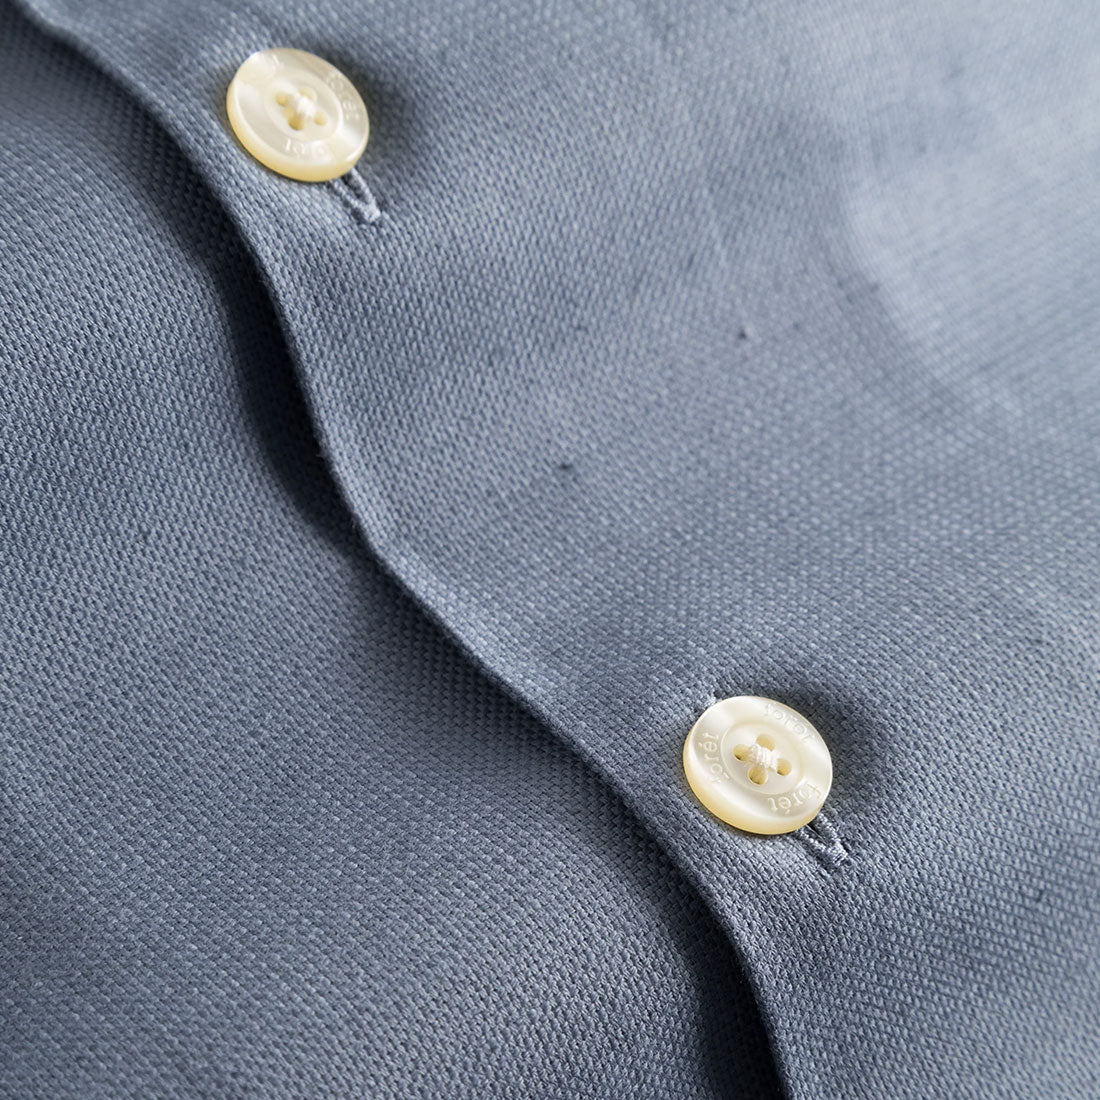 Camicia a maniche corte Forét - Basin Shirt-Azzurro